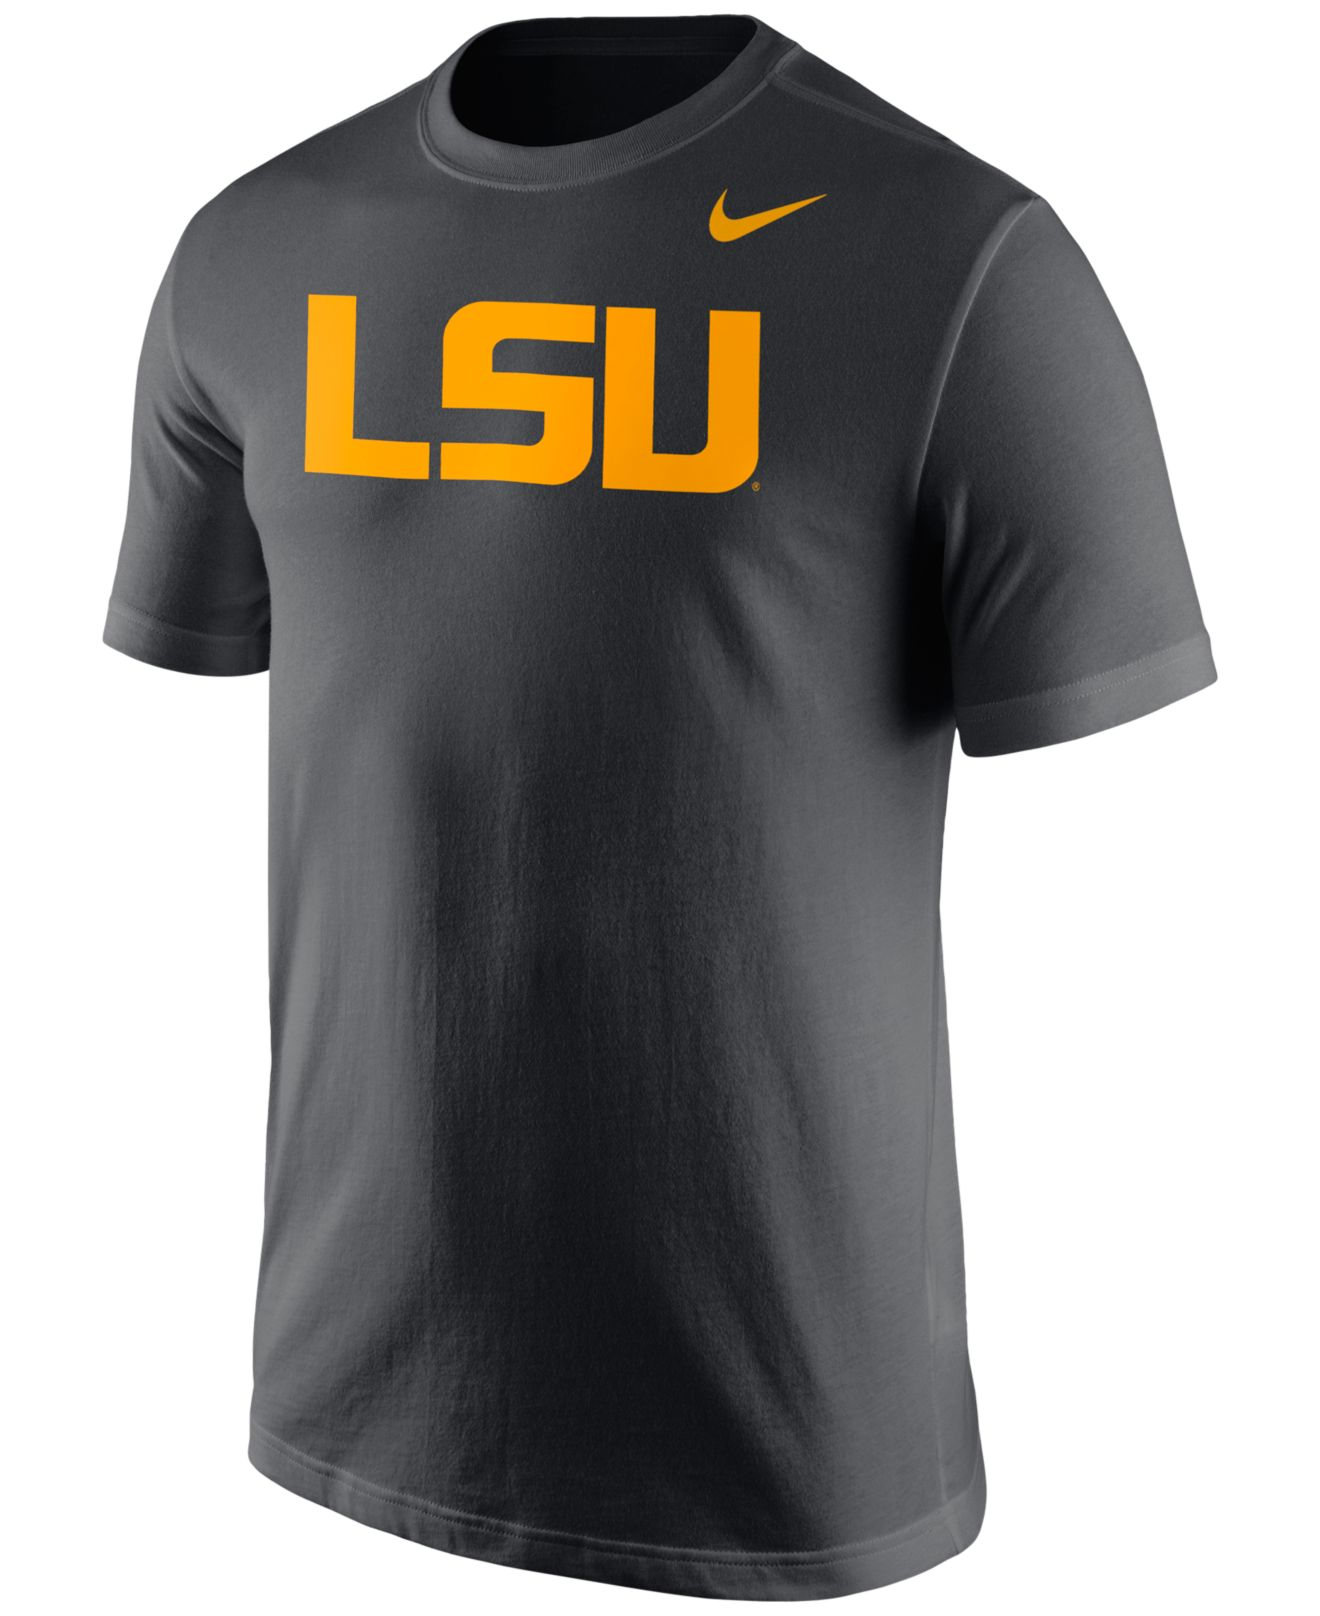 Lyst - Nike Men's Lsu Tigers Wordmark T-shirt in Gray for Men